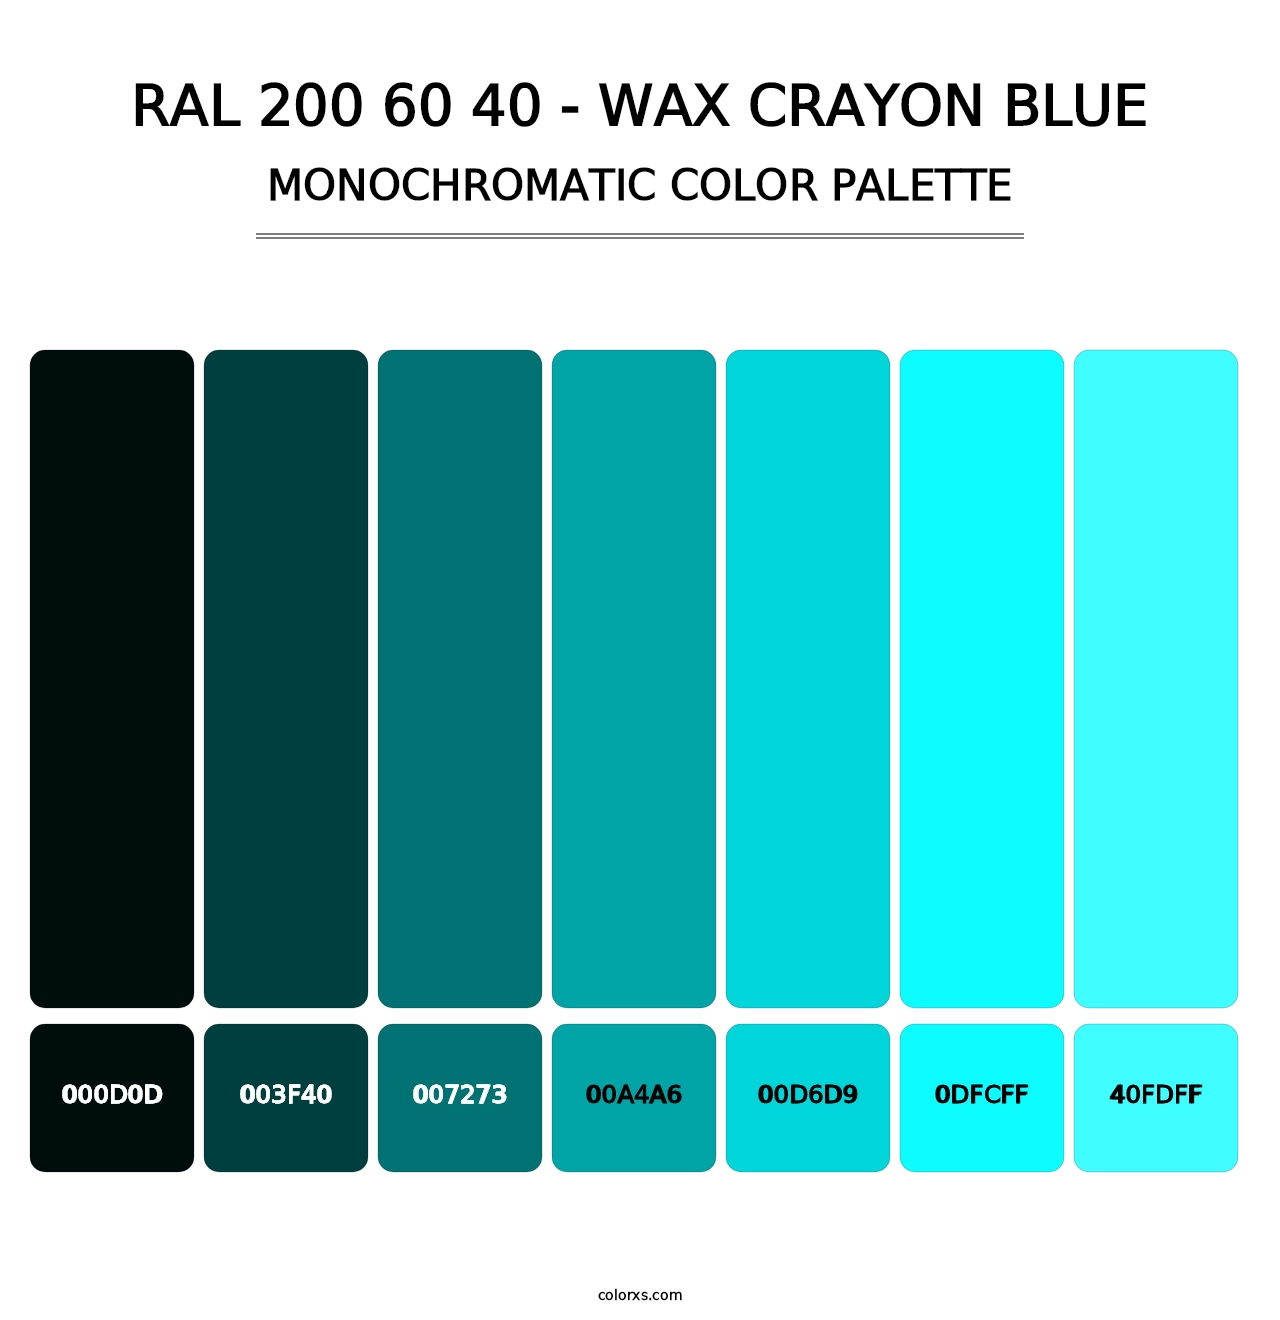 RAL 200 60 40 - Wax Crayon Blue - Monochromatic Color Palette